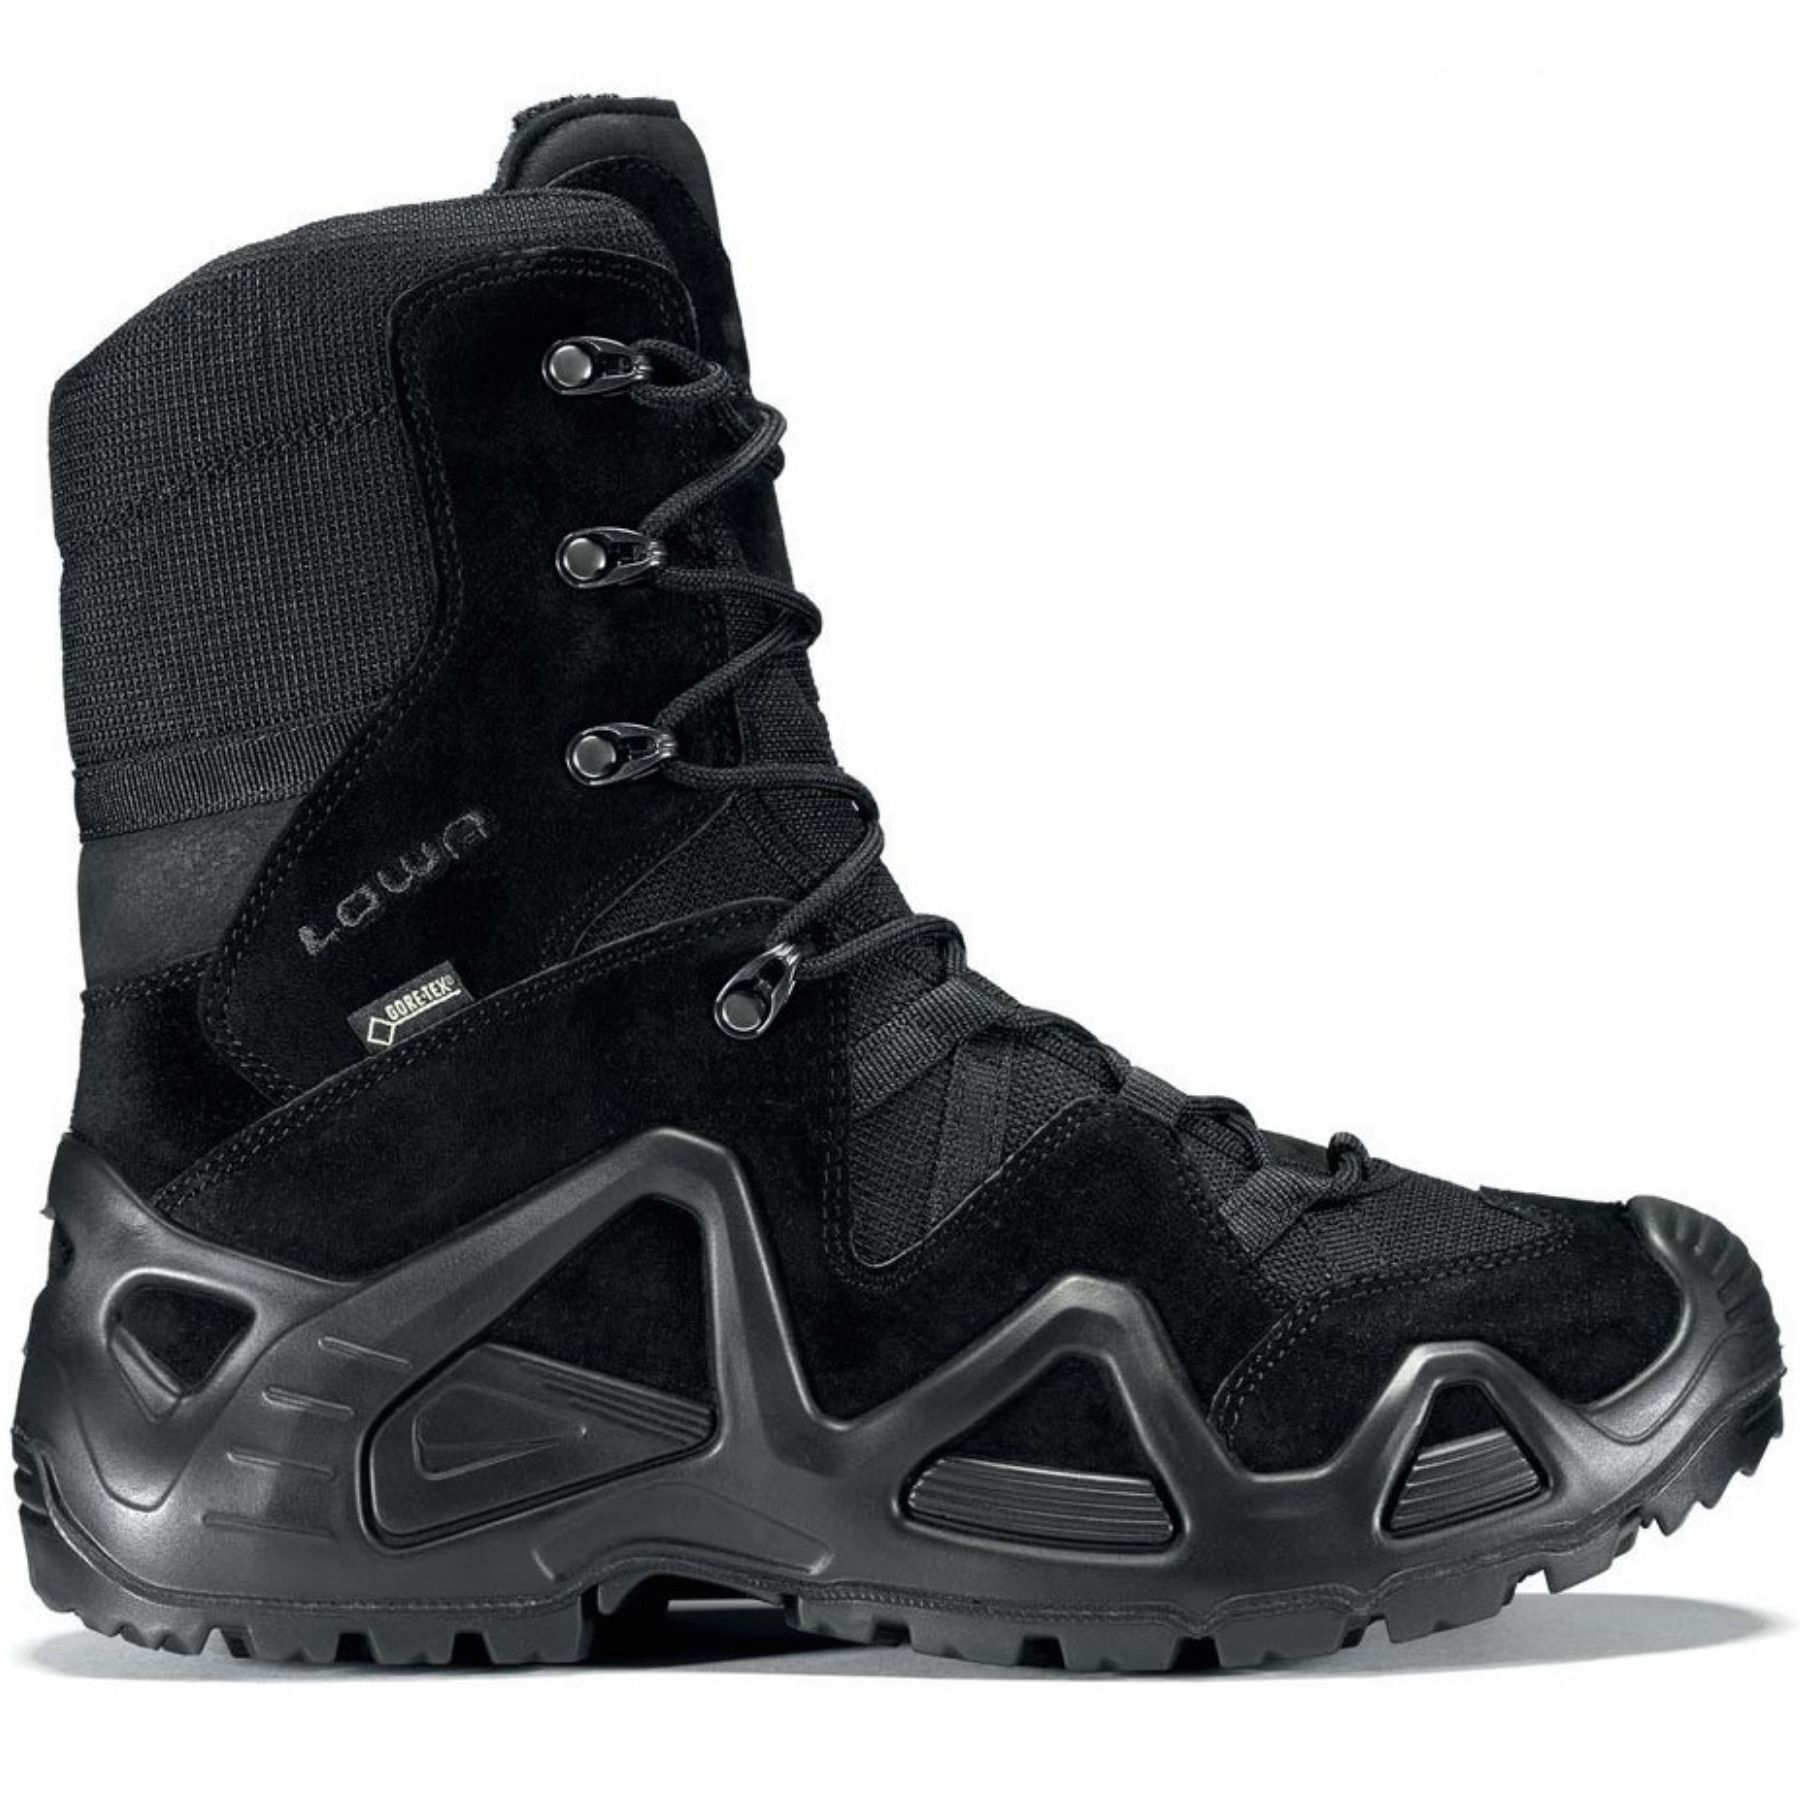 Lowa - Zephyr GTX® Hi TF - Walking Boots - Men's